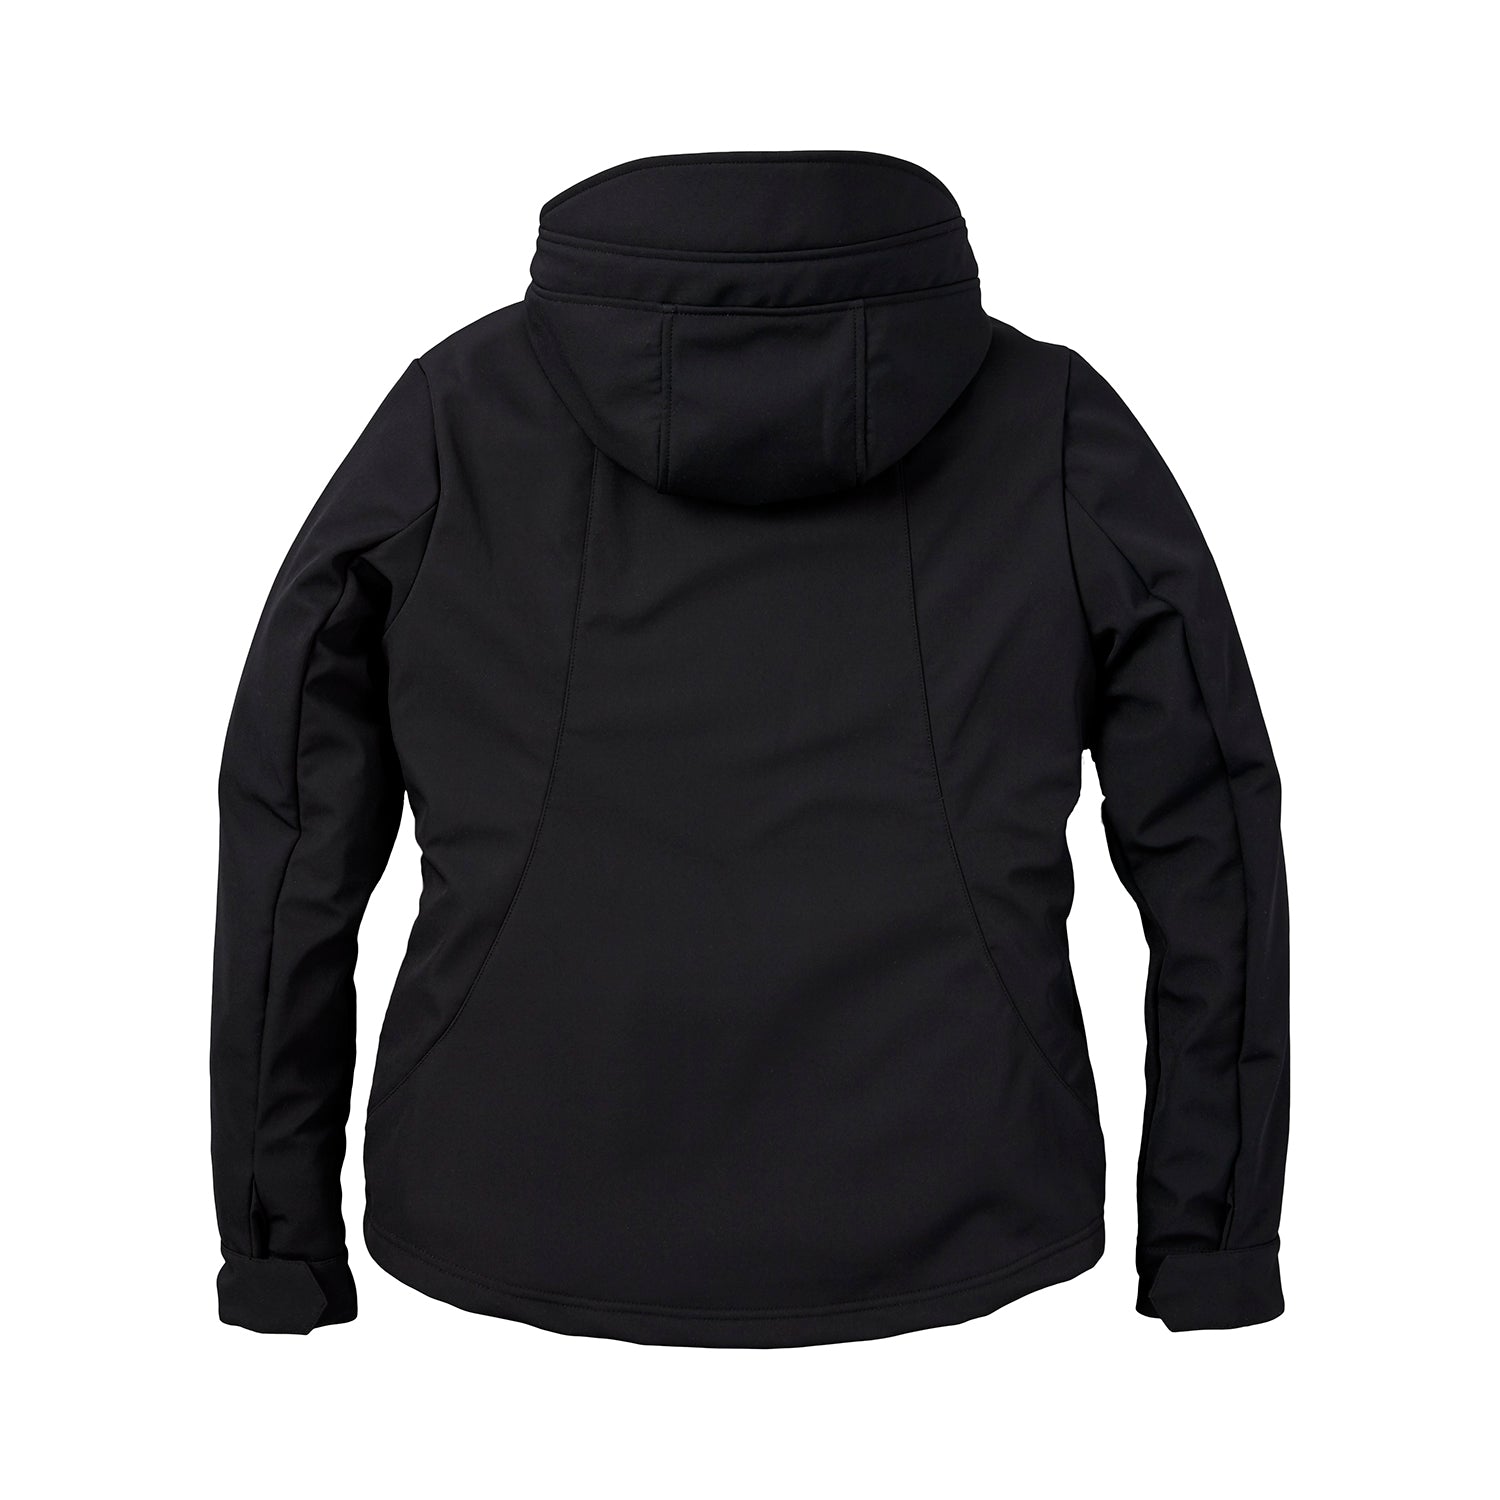 Women's Casual Softshell Jacket, Black - L